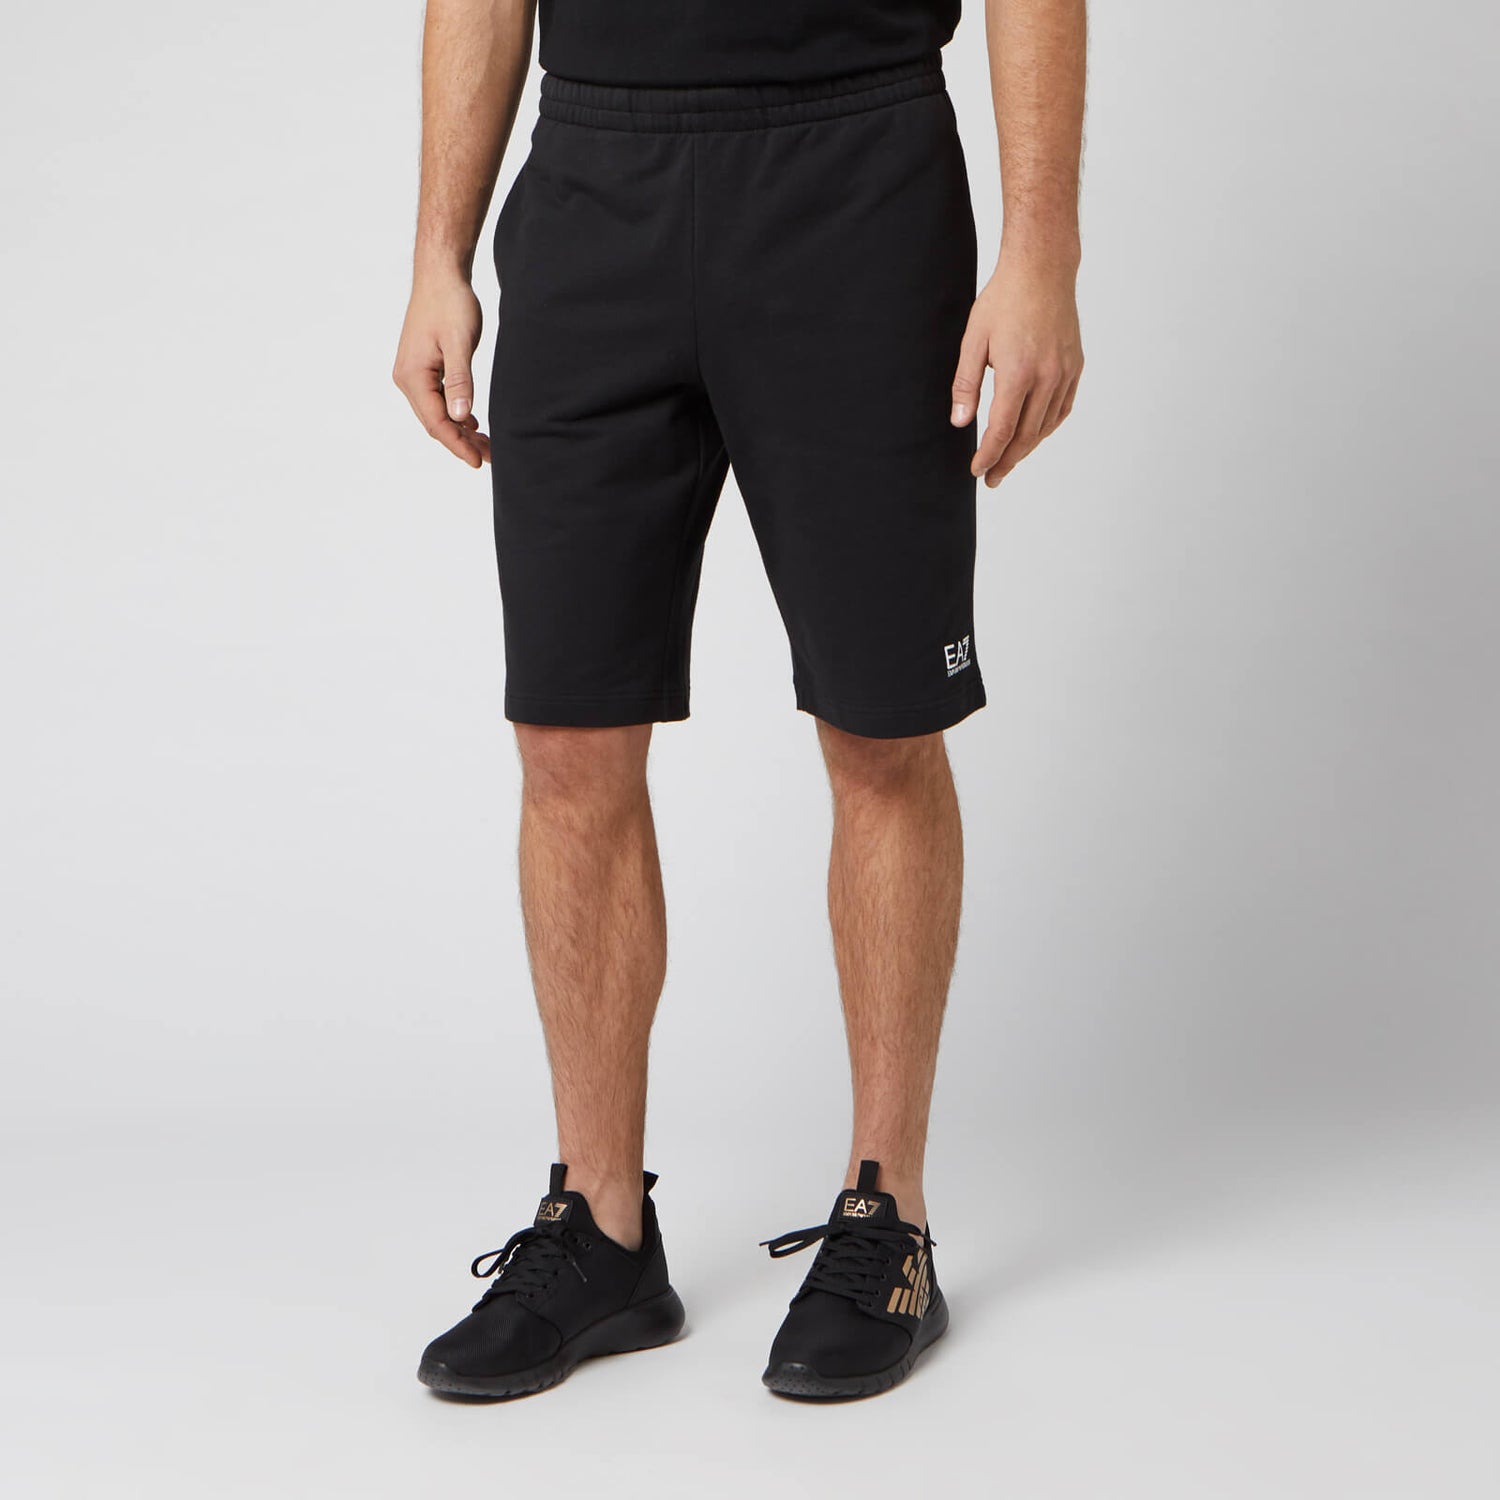 Emporio Armani EA7 Men's Sweat Short - Black - S